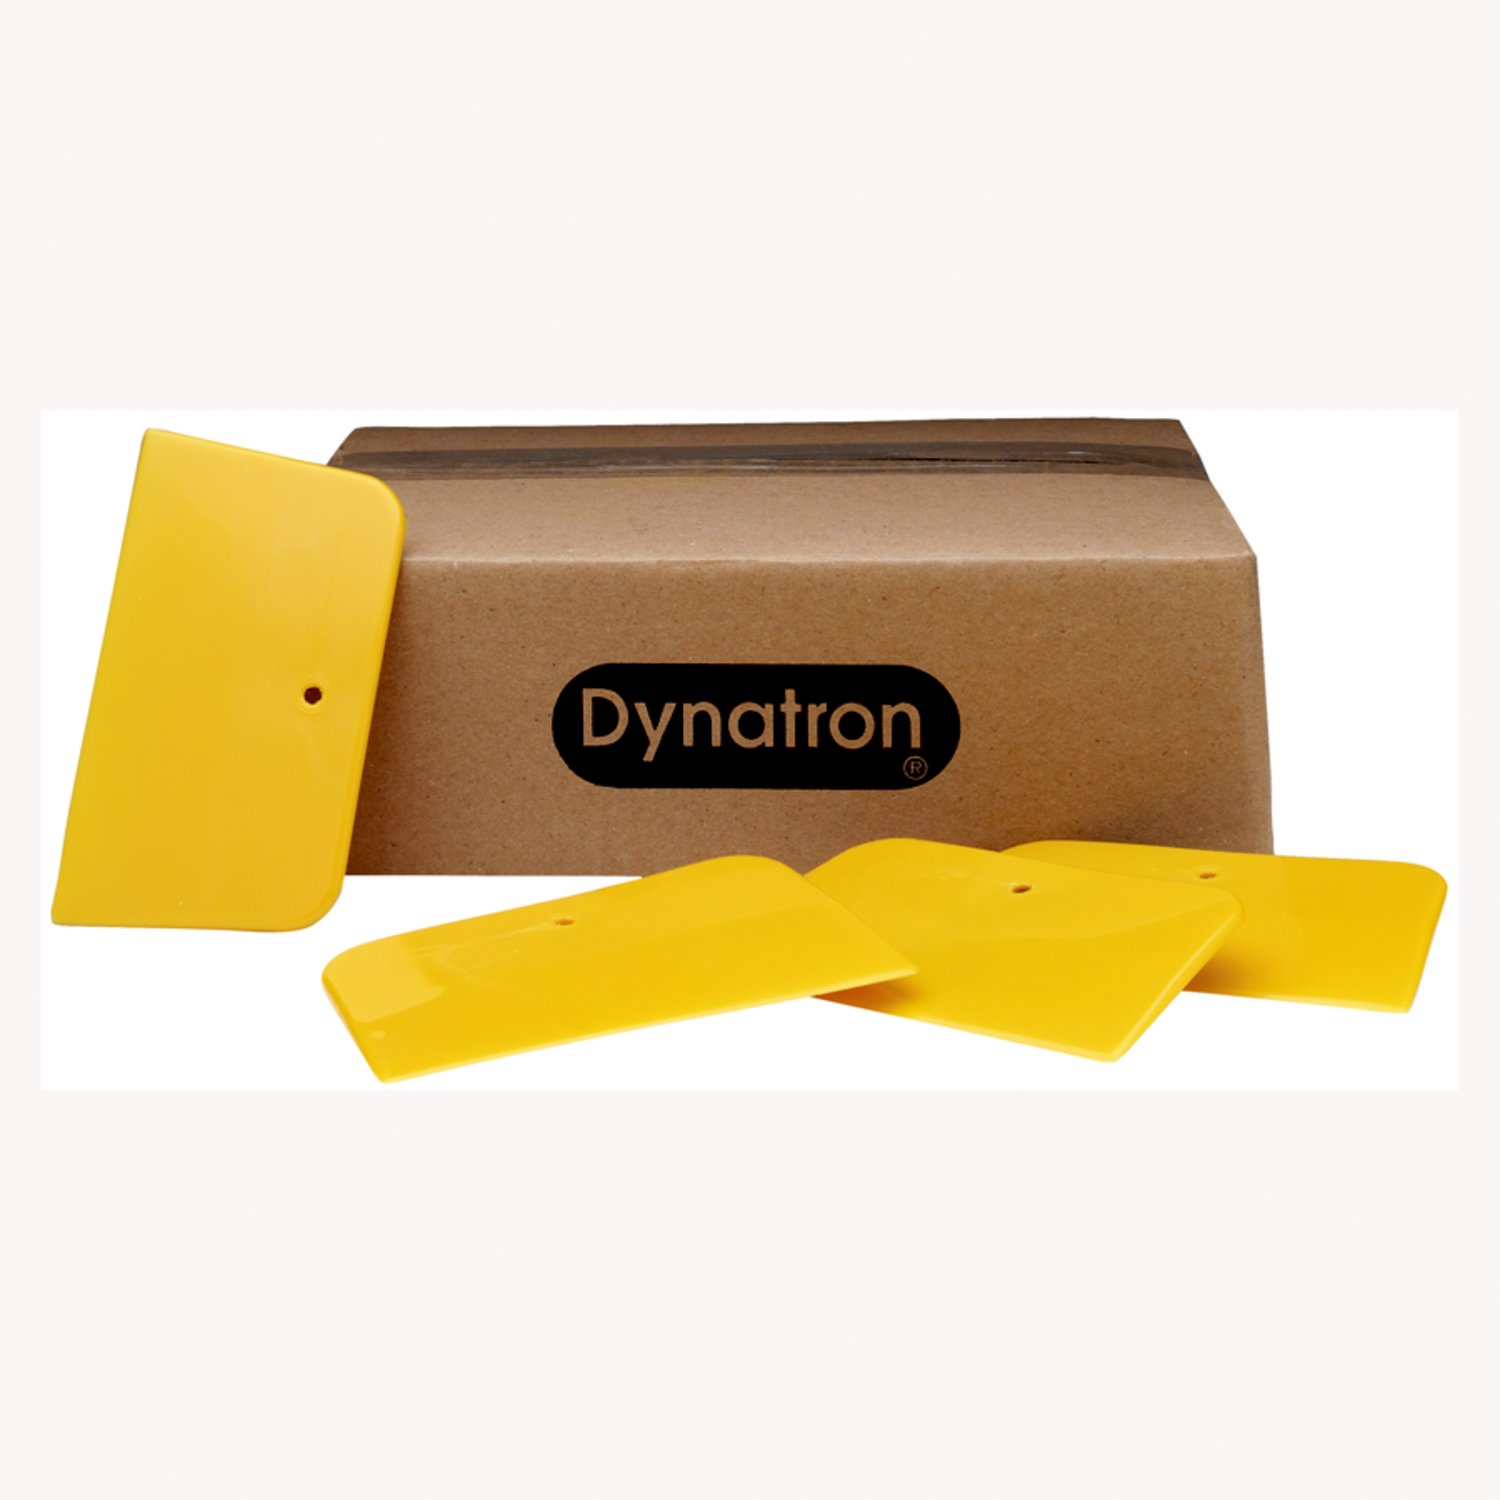 7000049852 - Dynatron Yellow Spreader, 354, 3 x 5, 144 per case